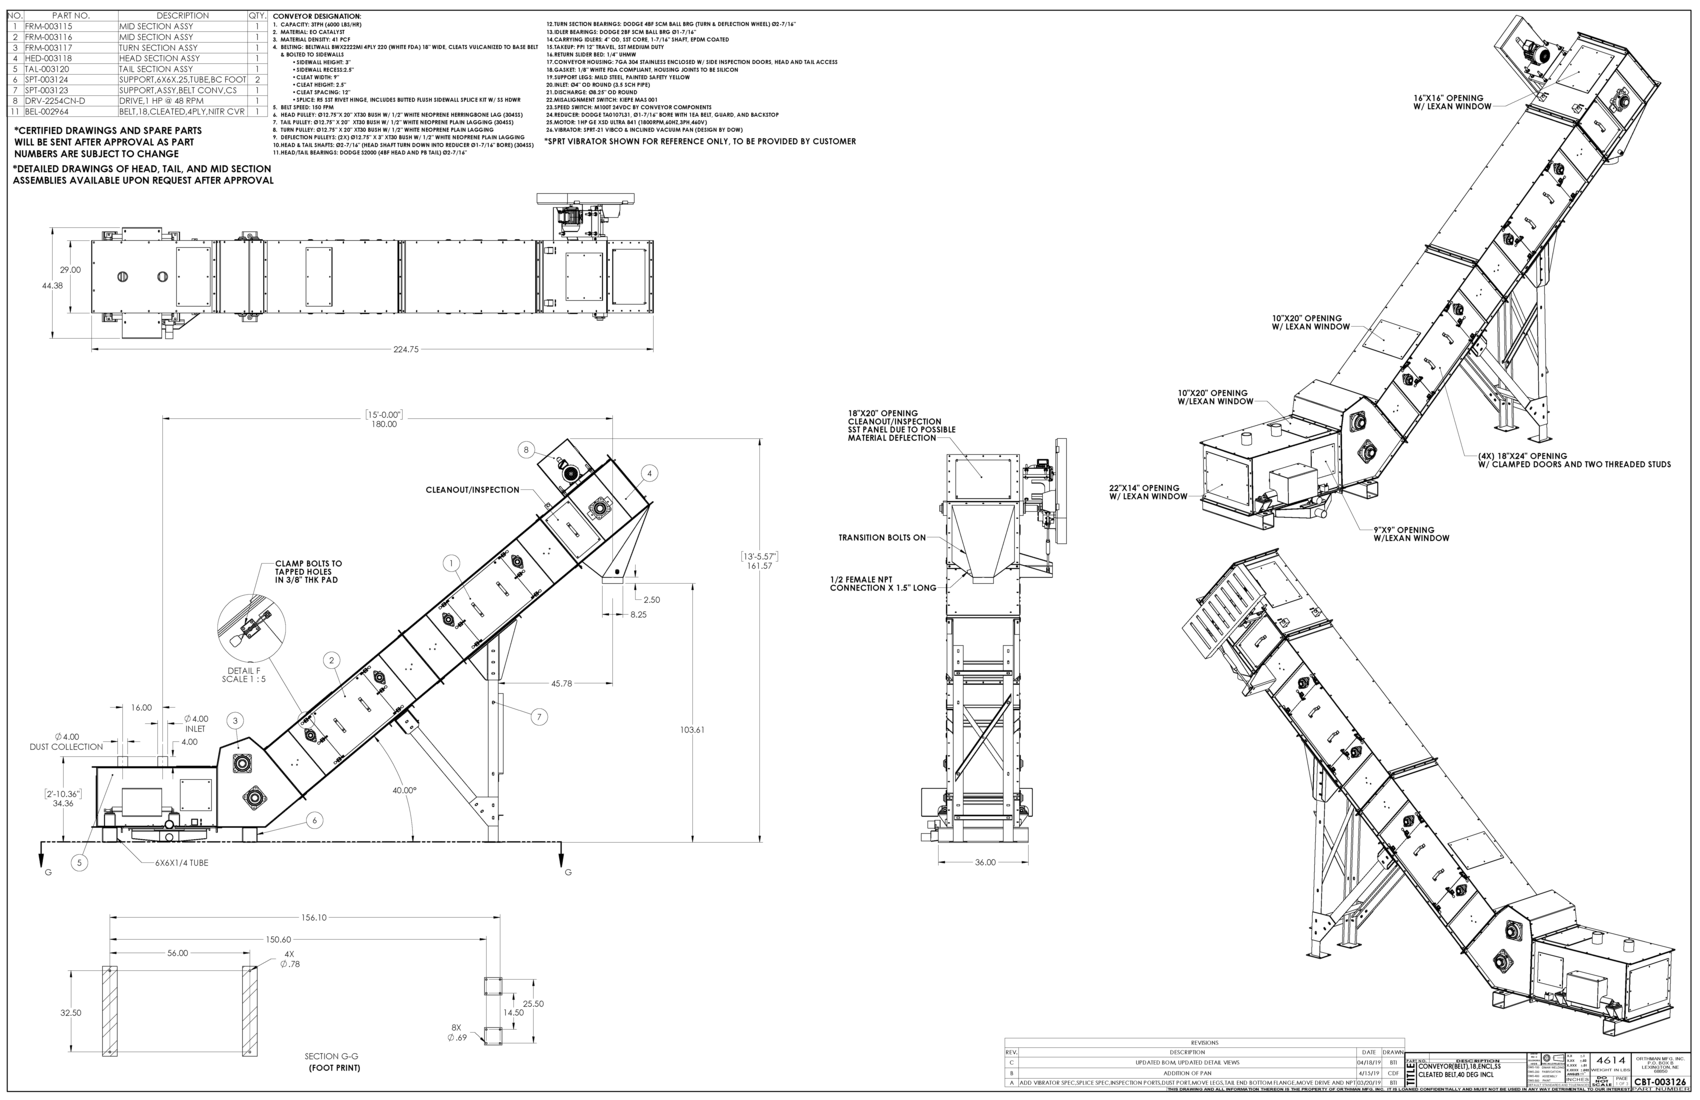 Conveyor System